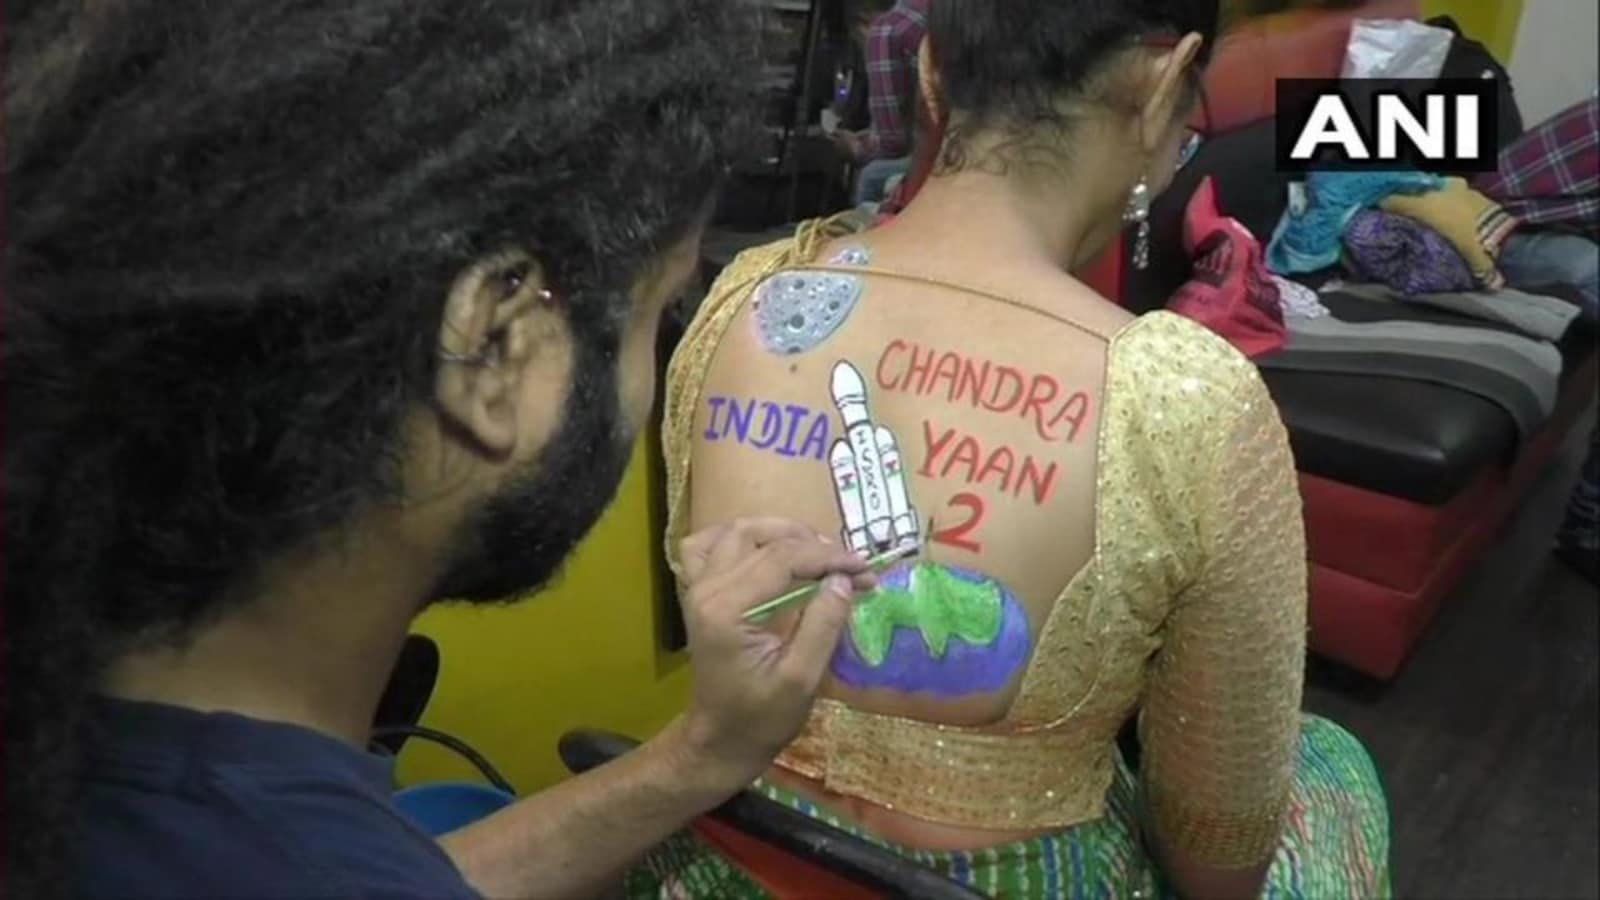 Surat women sport Chandrayaan-2, Article 370 tattoos to celebrate Navratri